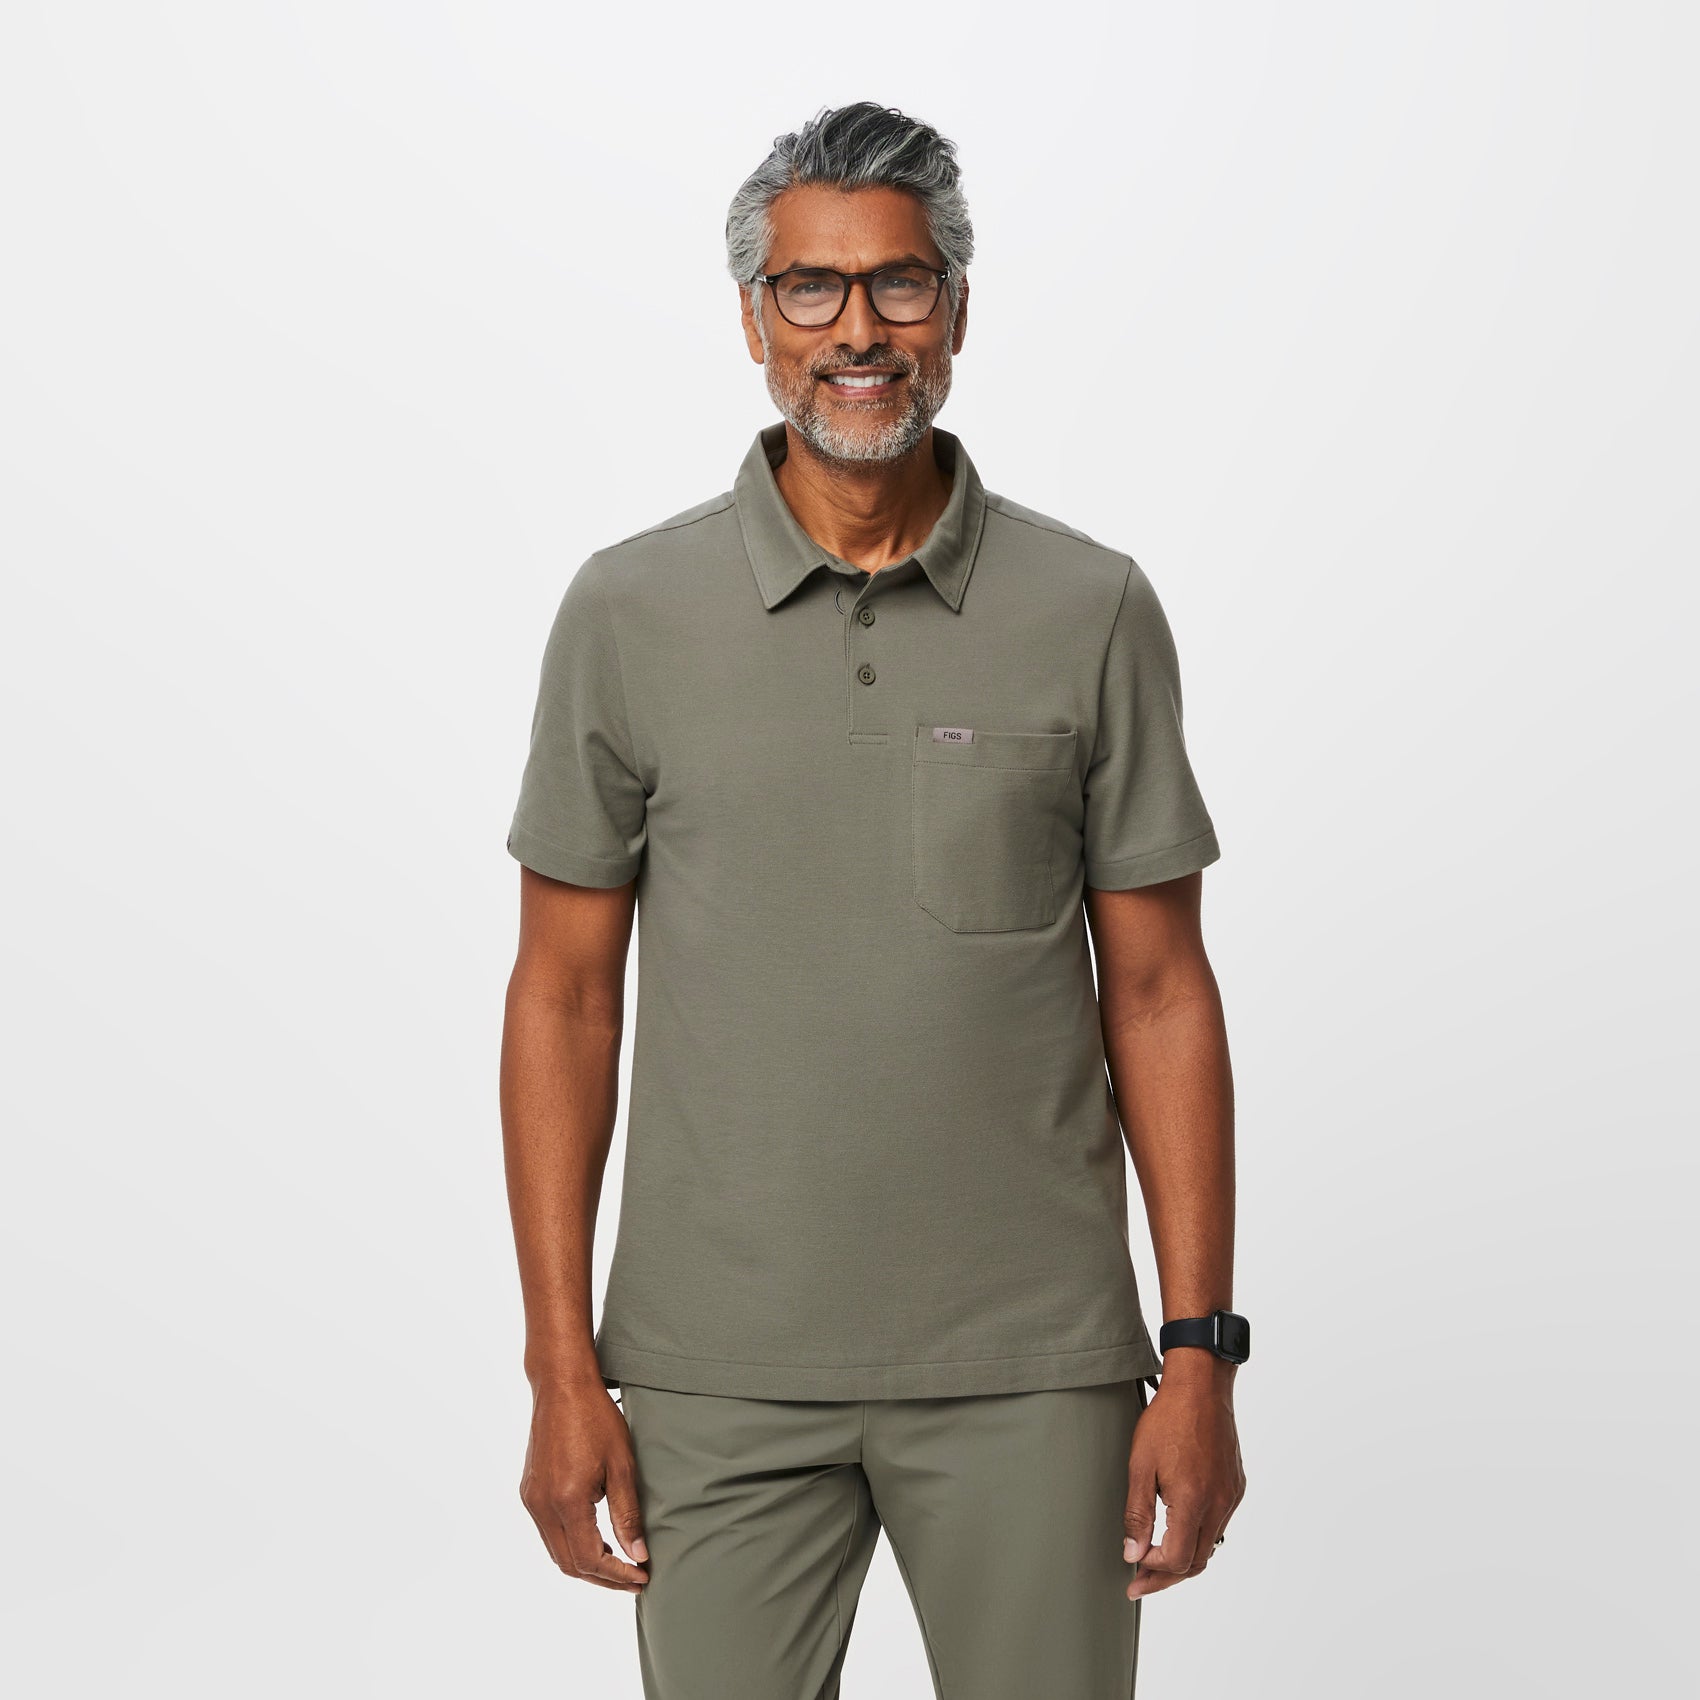 Monogram Cotton Pique T-Shirt - Men - Ready-to-Wear